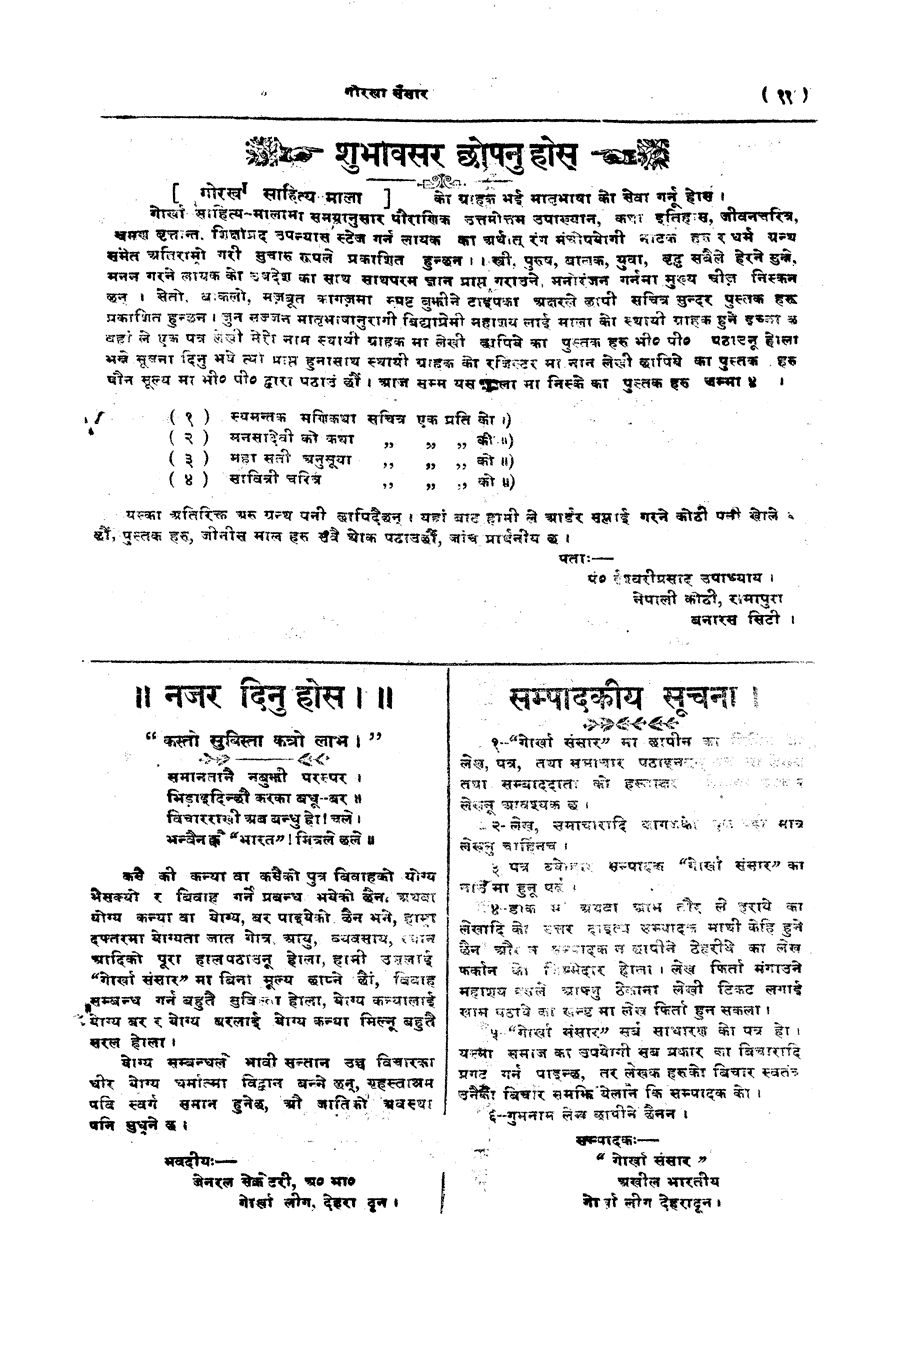 Gorkha Sansar, 8 June 1928, page 11